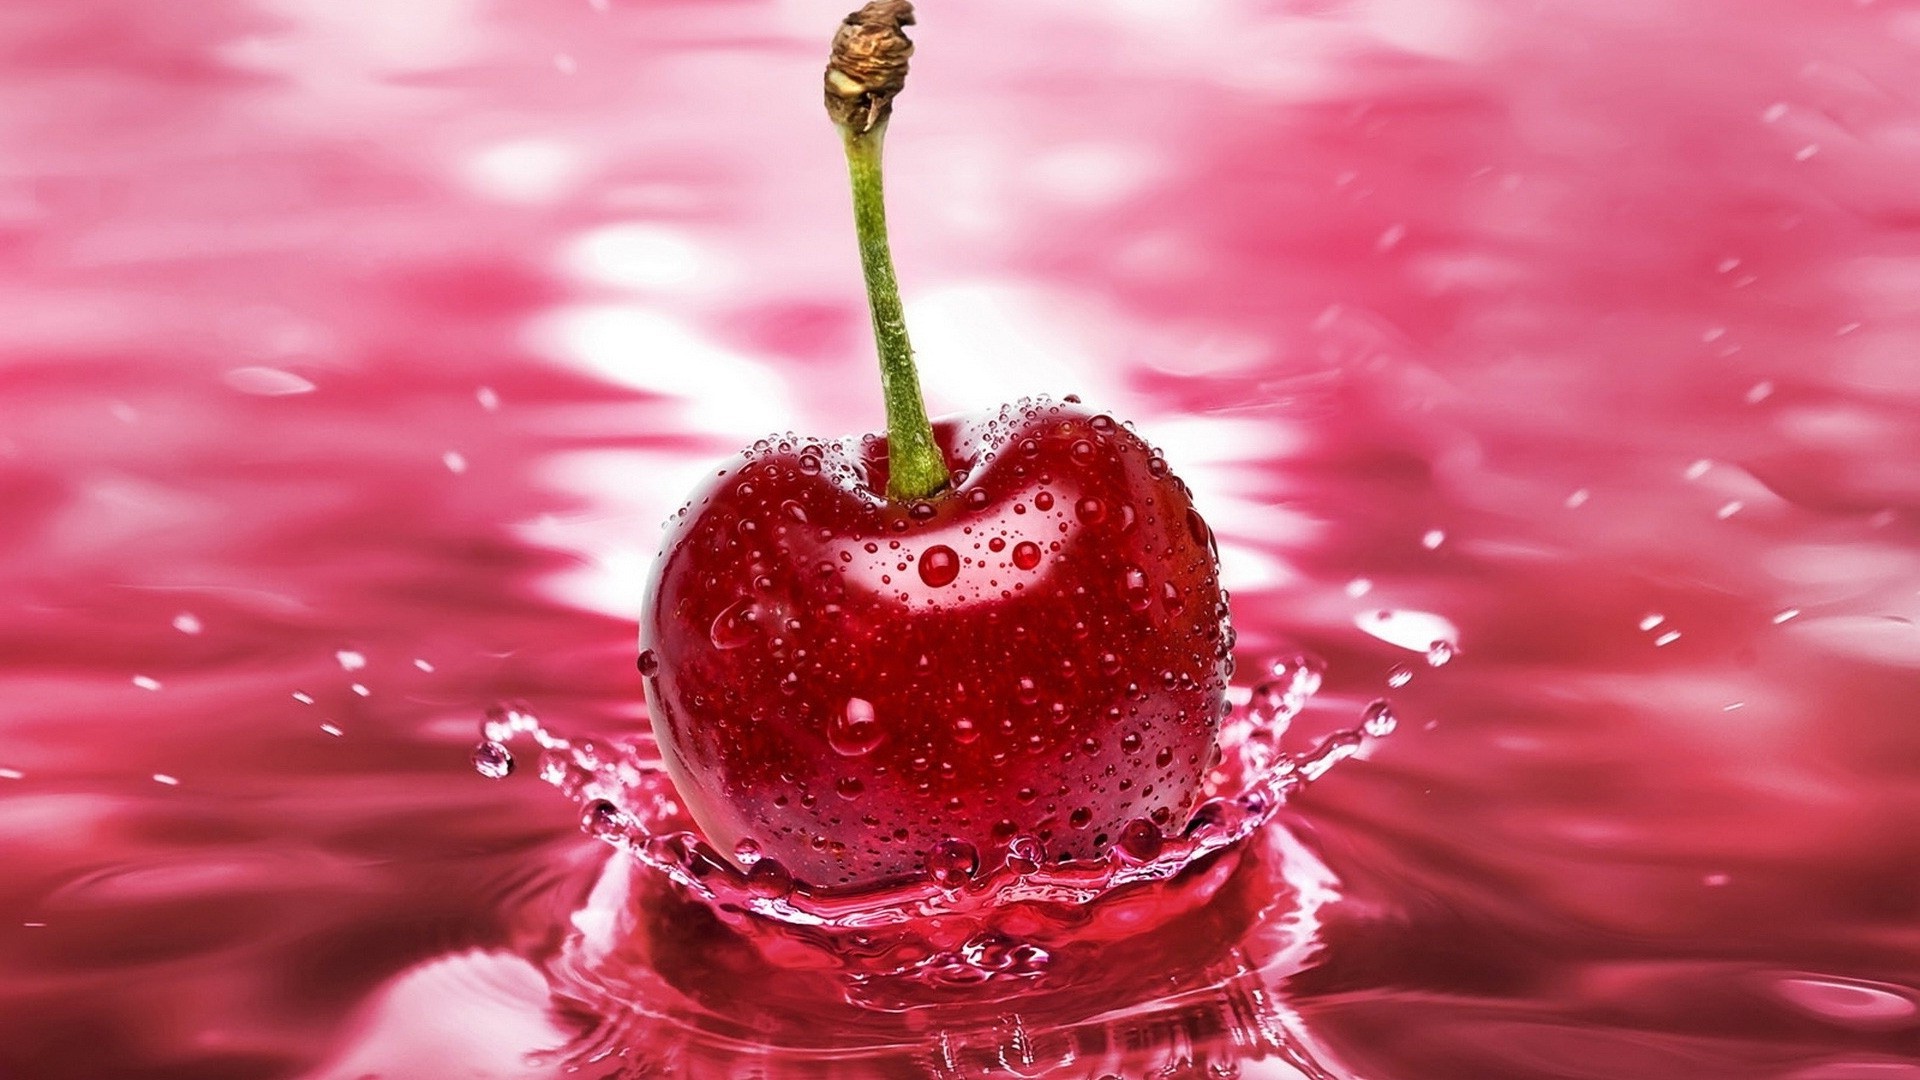 Cherries Water Drops Wallpapers 16422 Wallpaper Wallpaper hd